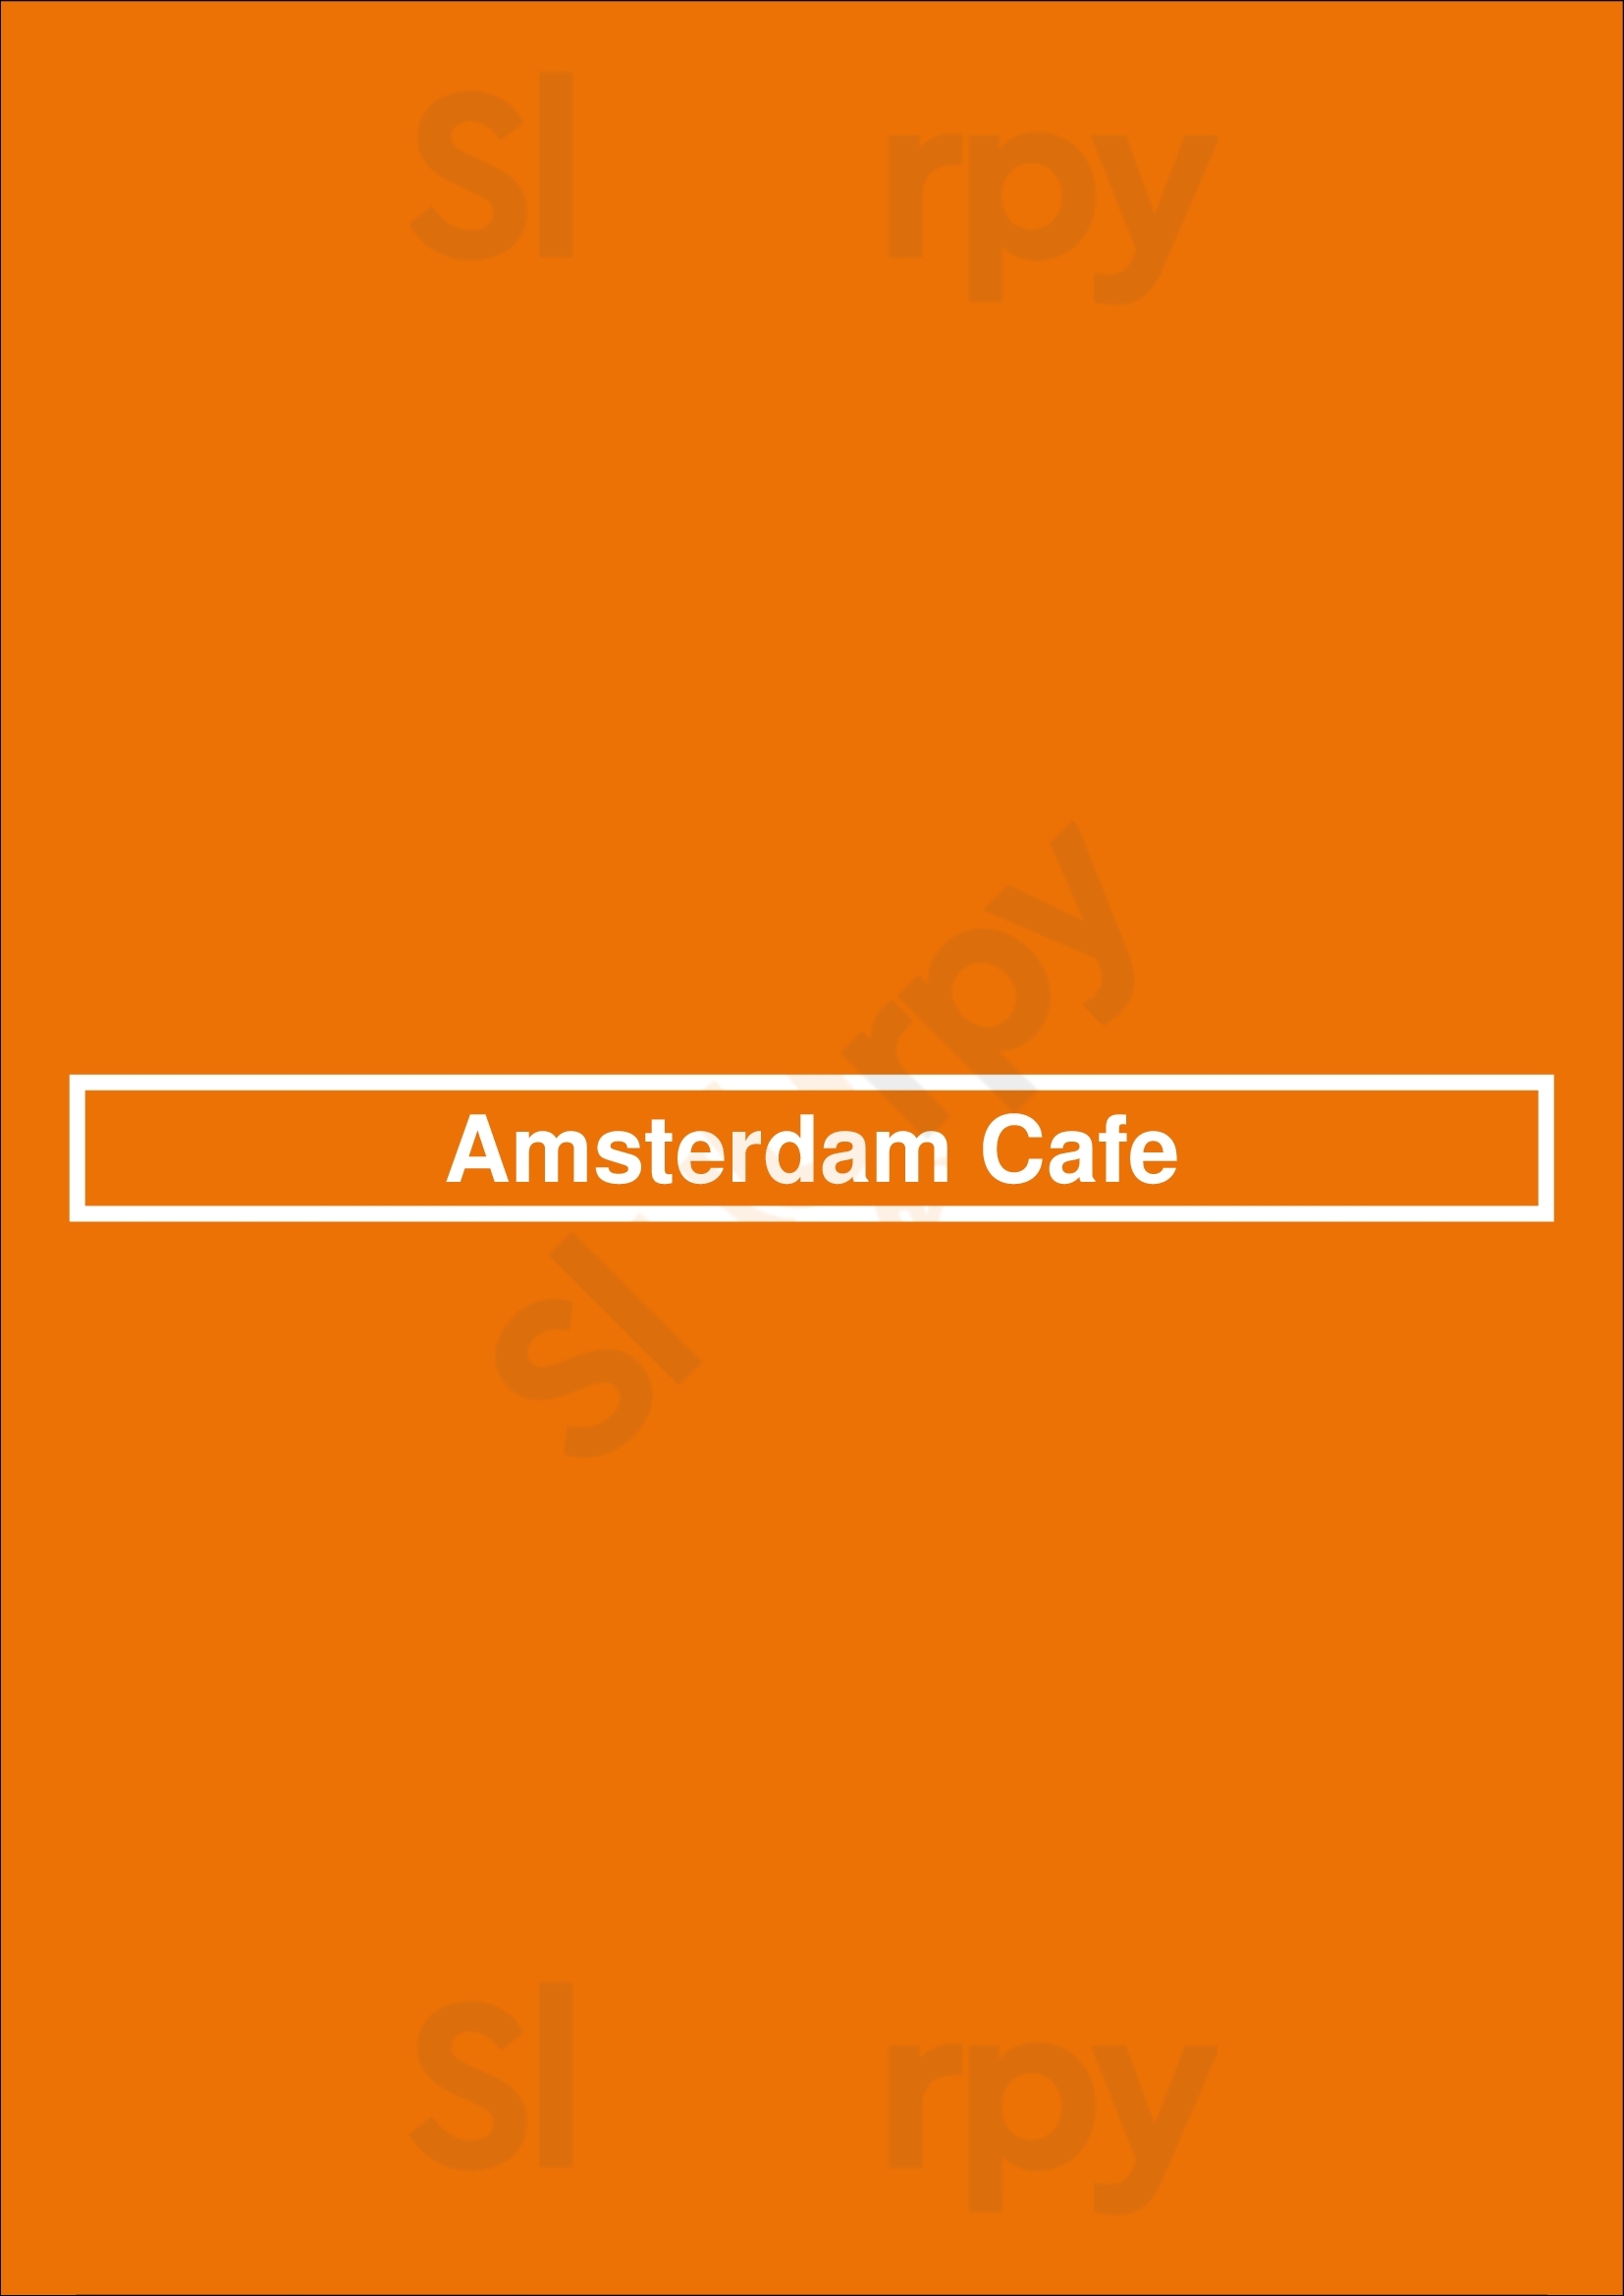 Amsterdam Cafe San Francisco Menu - 1